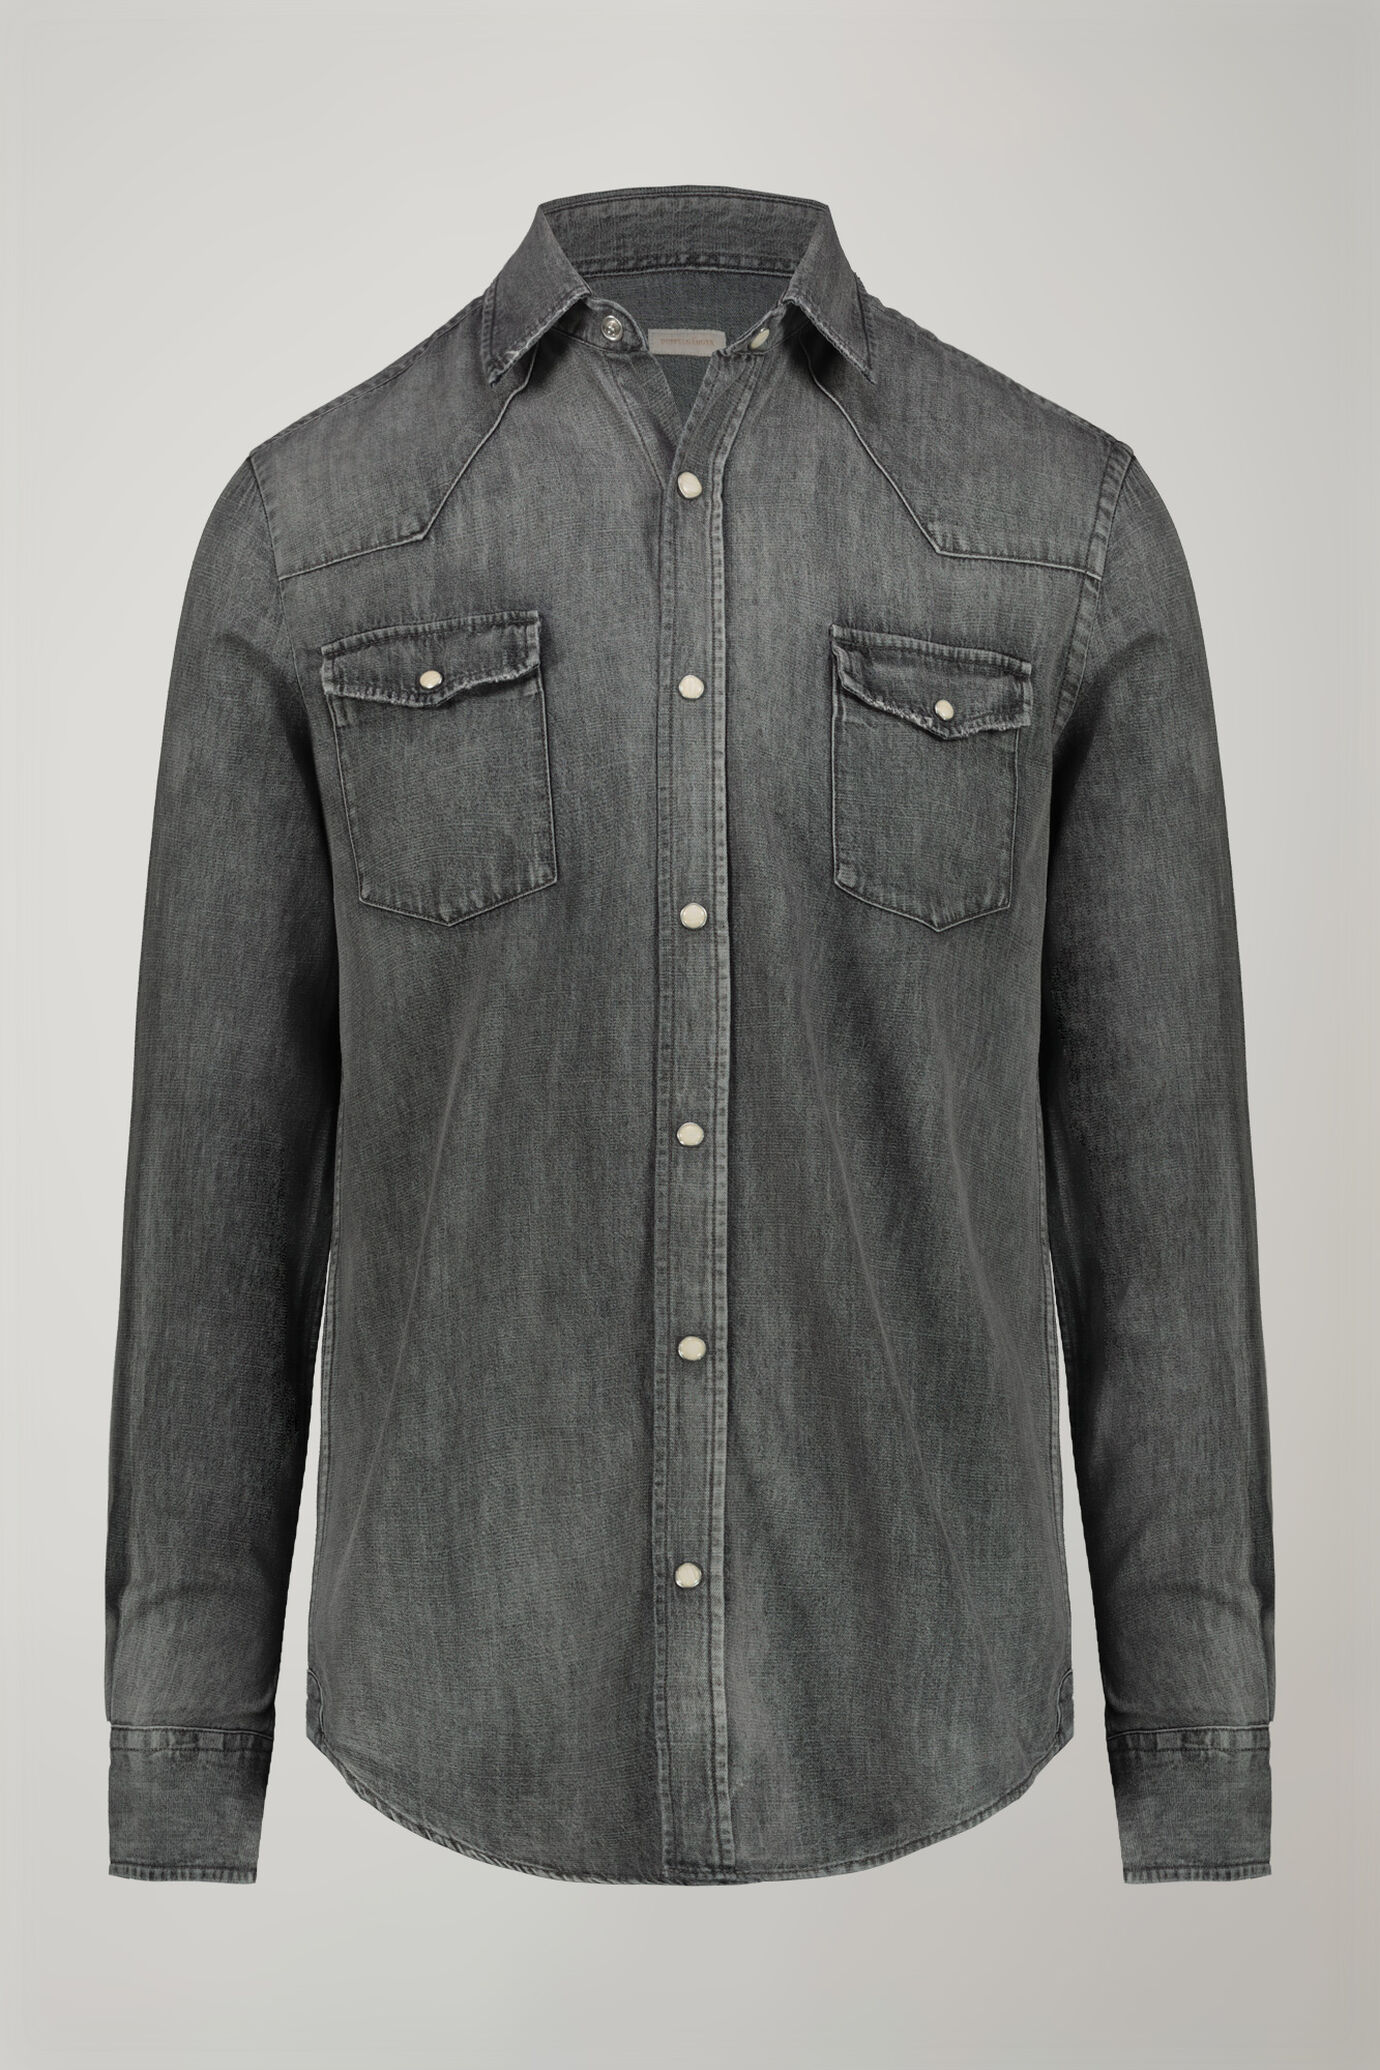 Men’s casual shirt classic collar 100% cotton denim fabric comfort fit image number 5